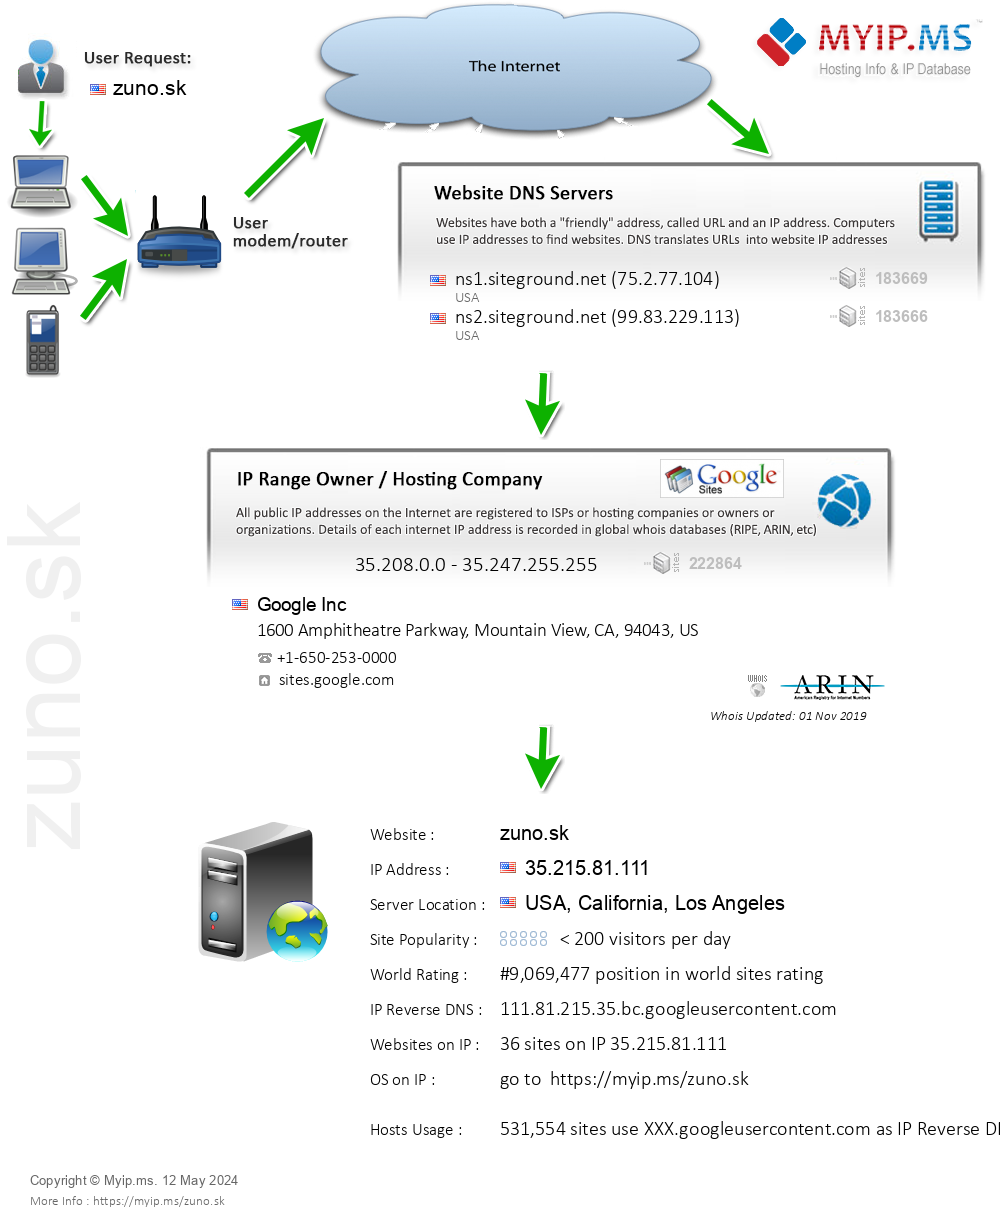 Zuno.sk - Website Hosting Visual IP Diagram